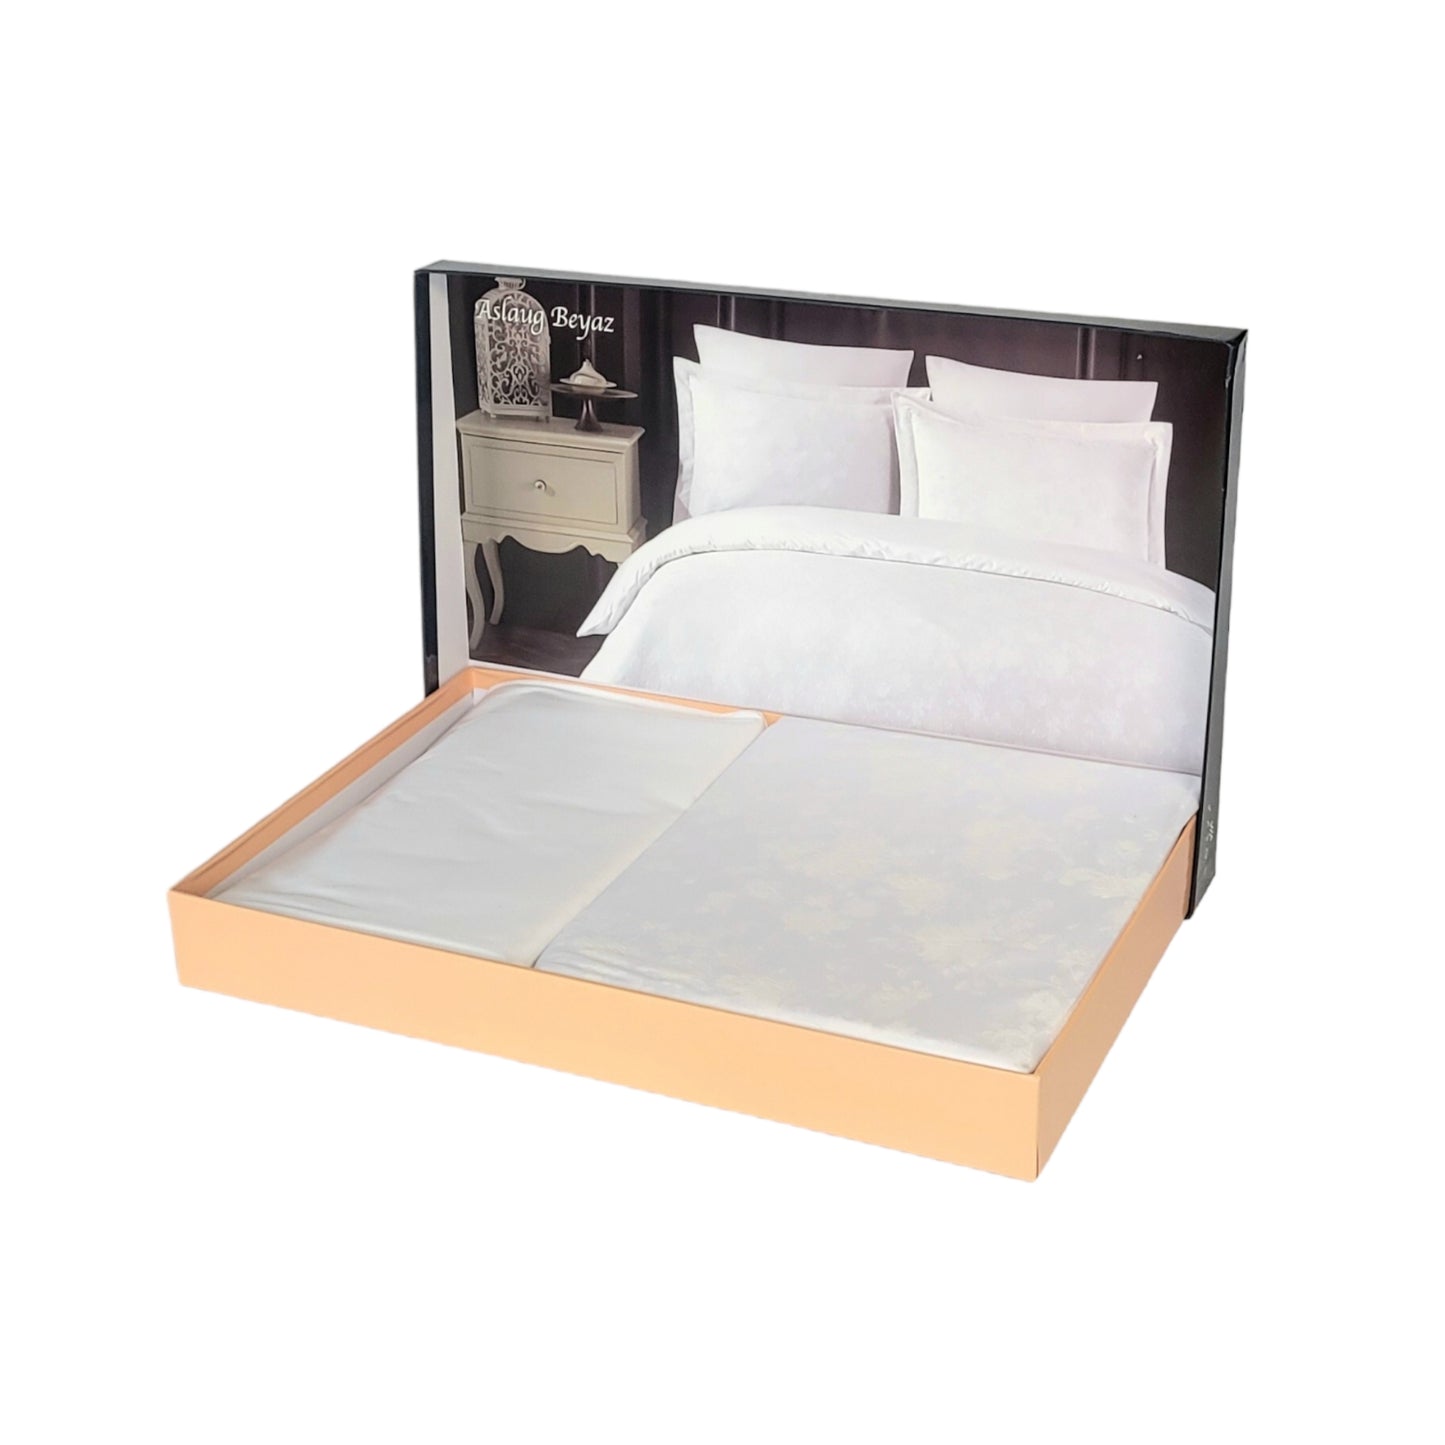 Varol Luxury Bedding Set - Organic Cotton, 6pcs, Euro Size, Jacquard